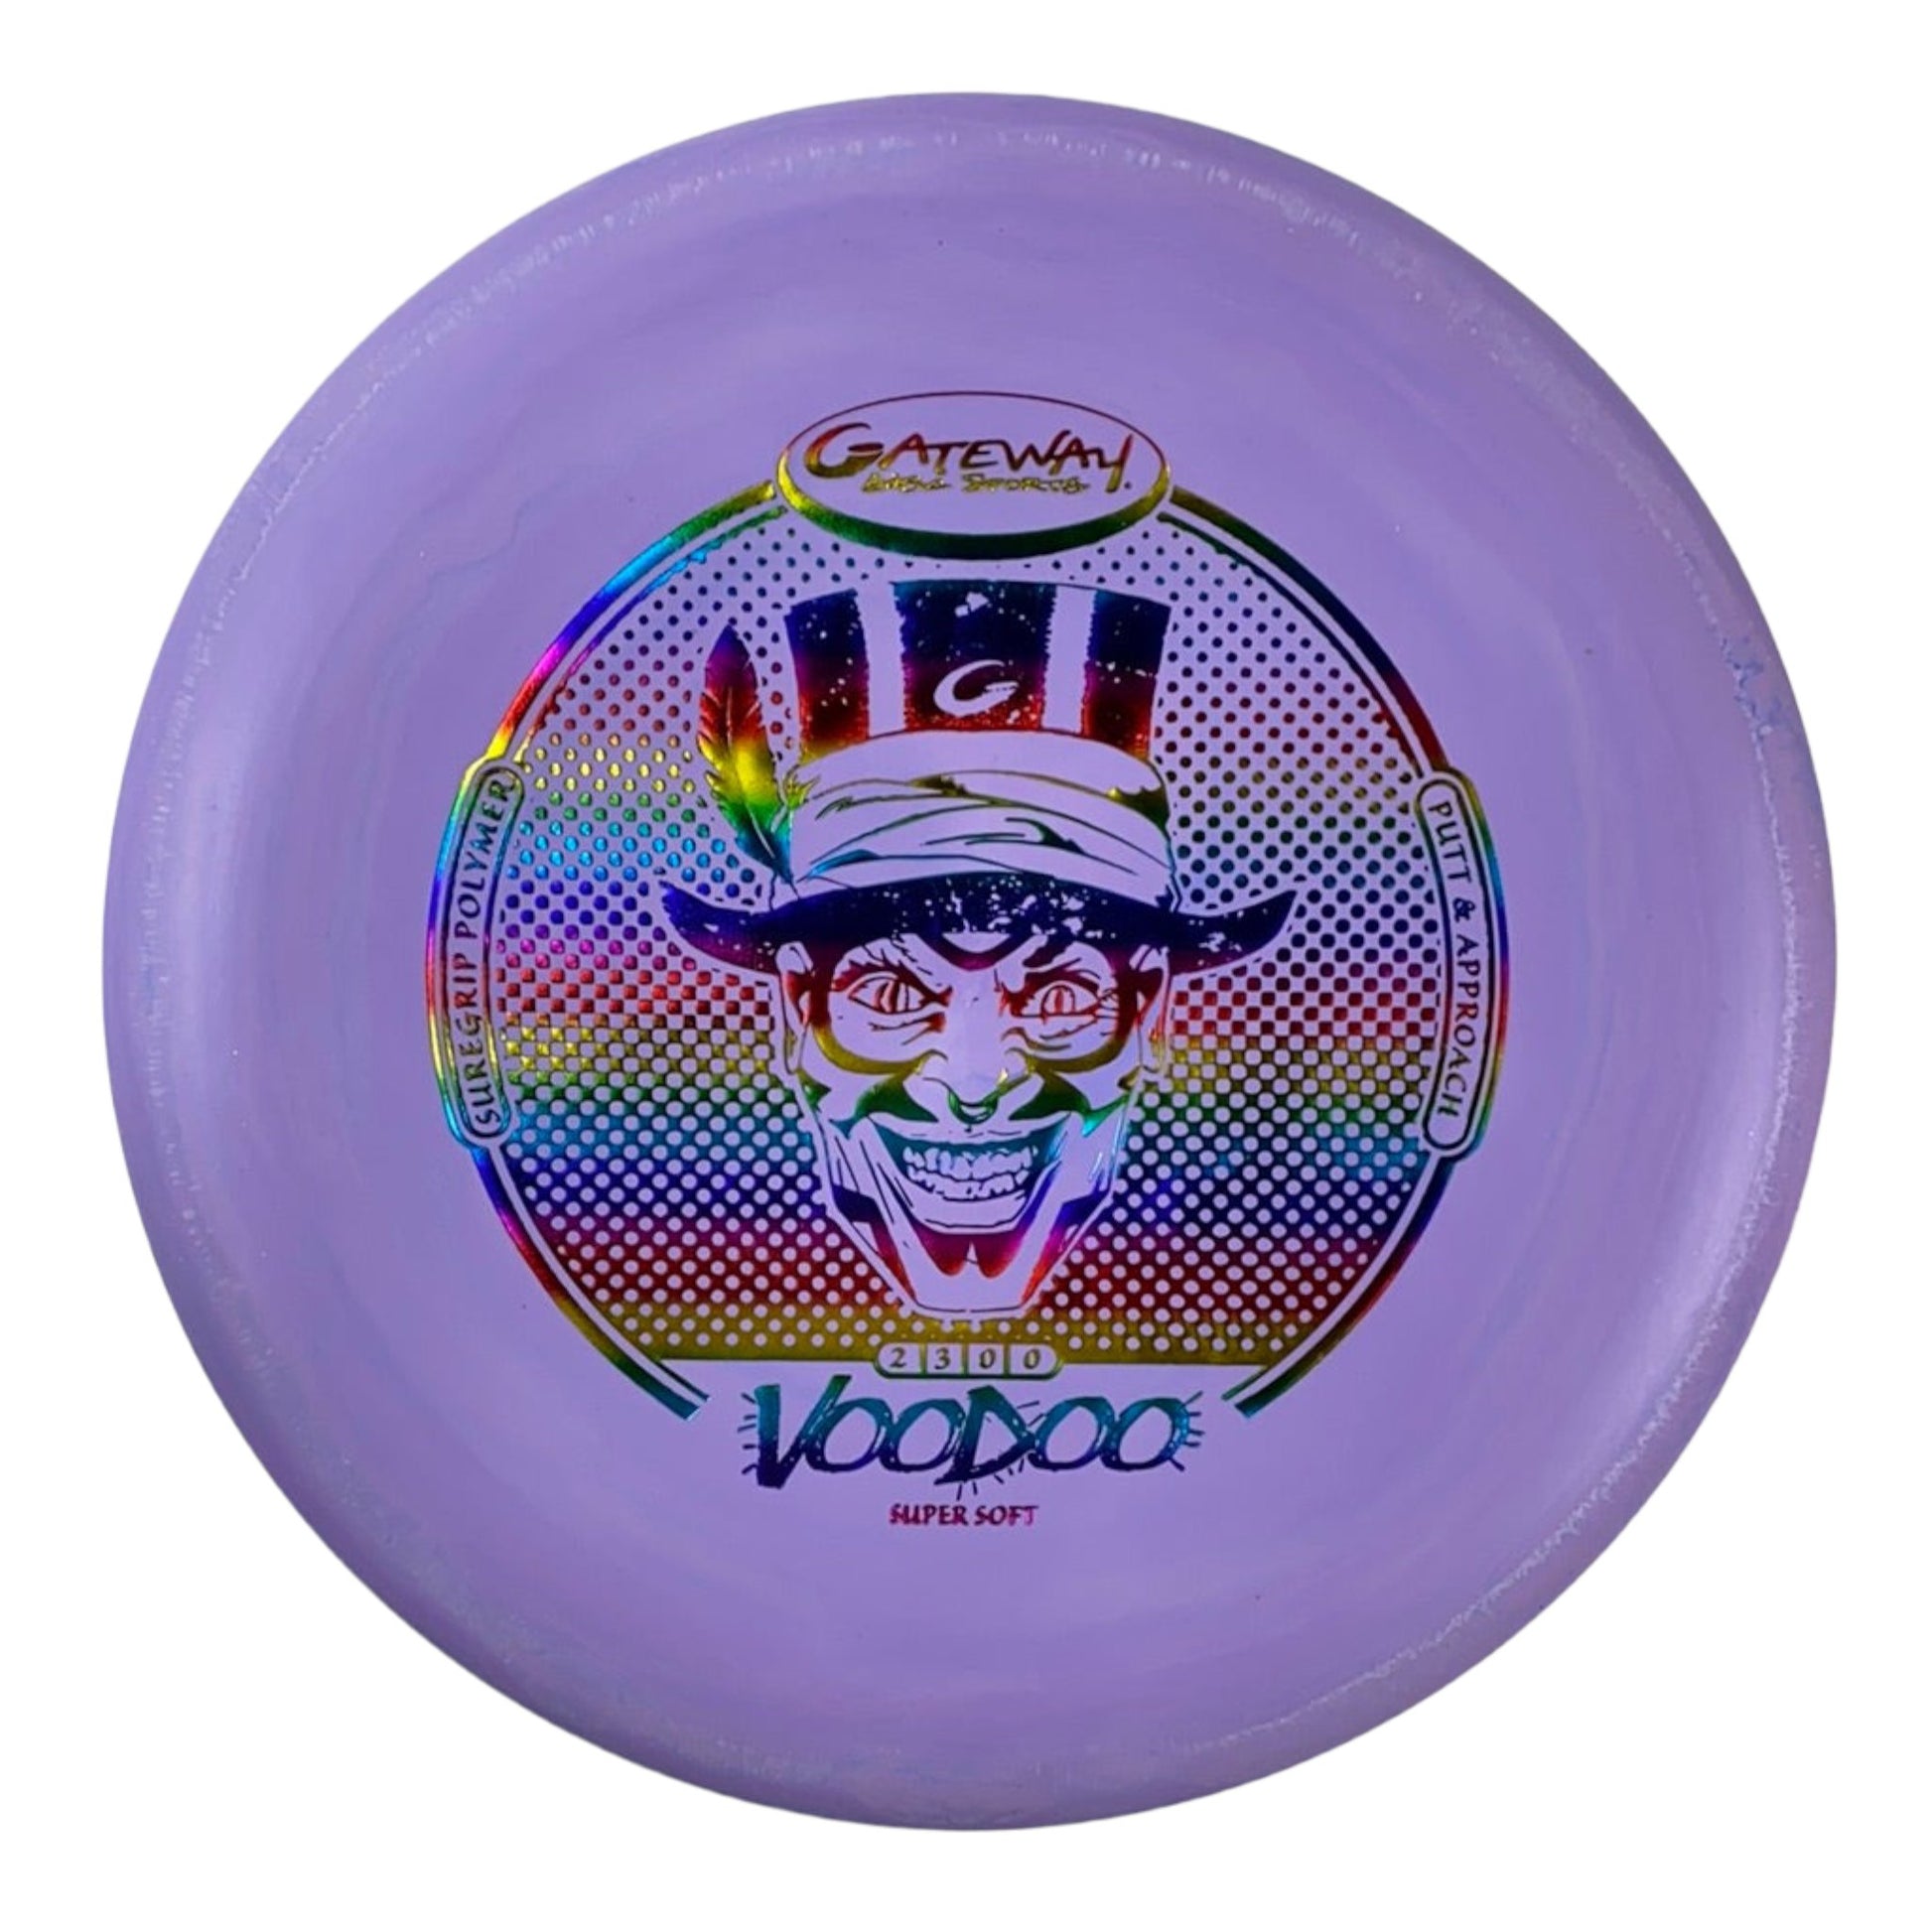 Gateway Disc Sports Voodoo | Super Soft (SS) | Purple/Rainbow 172g Disc Golf